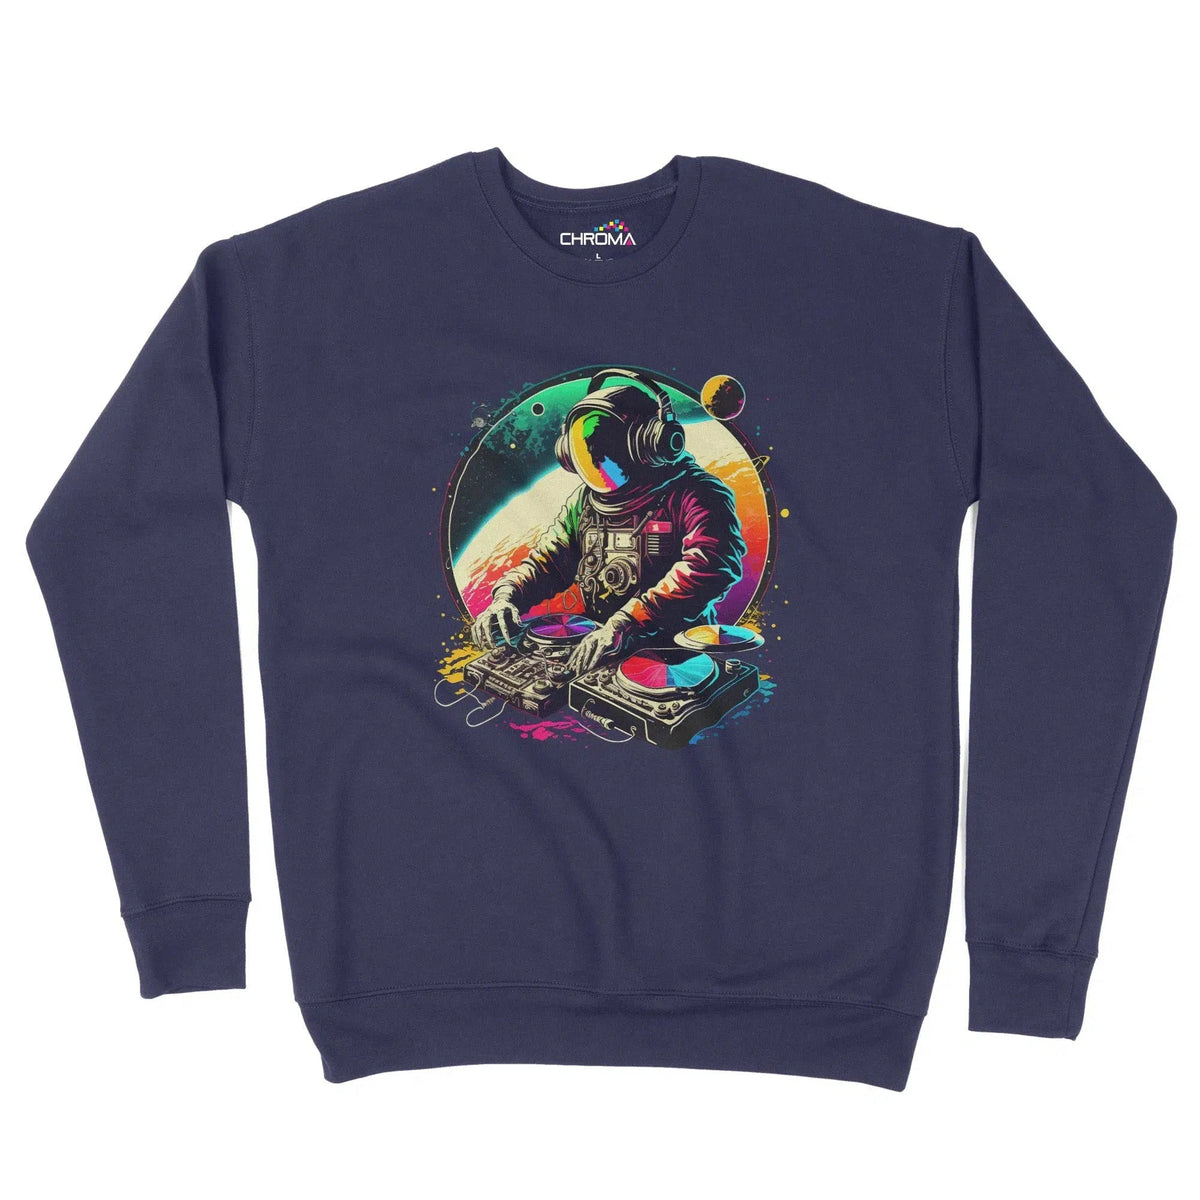 Astro Dj Unisex Adult Sweatshirt Chroma Clothing